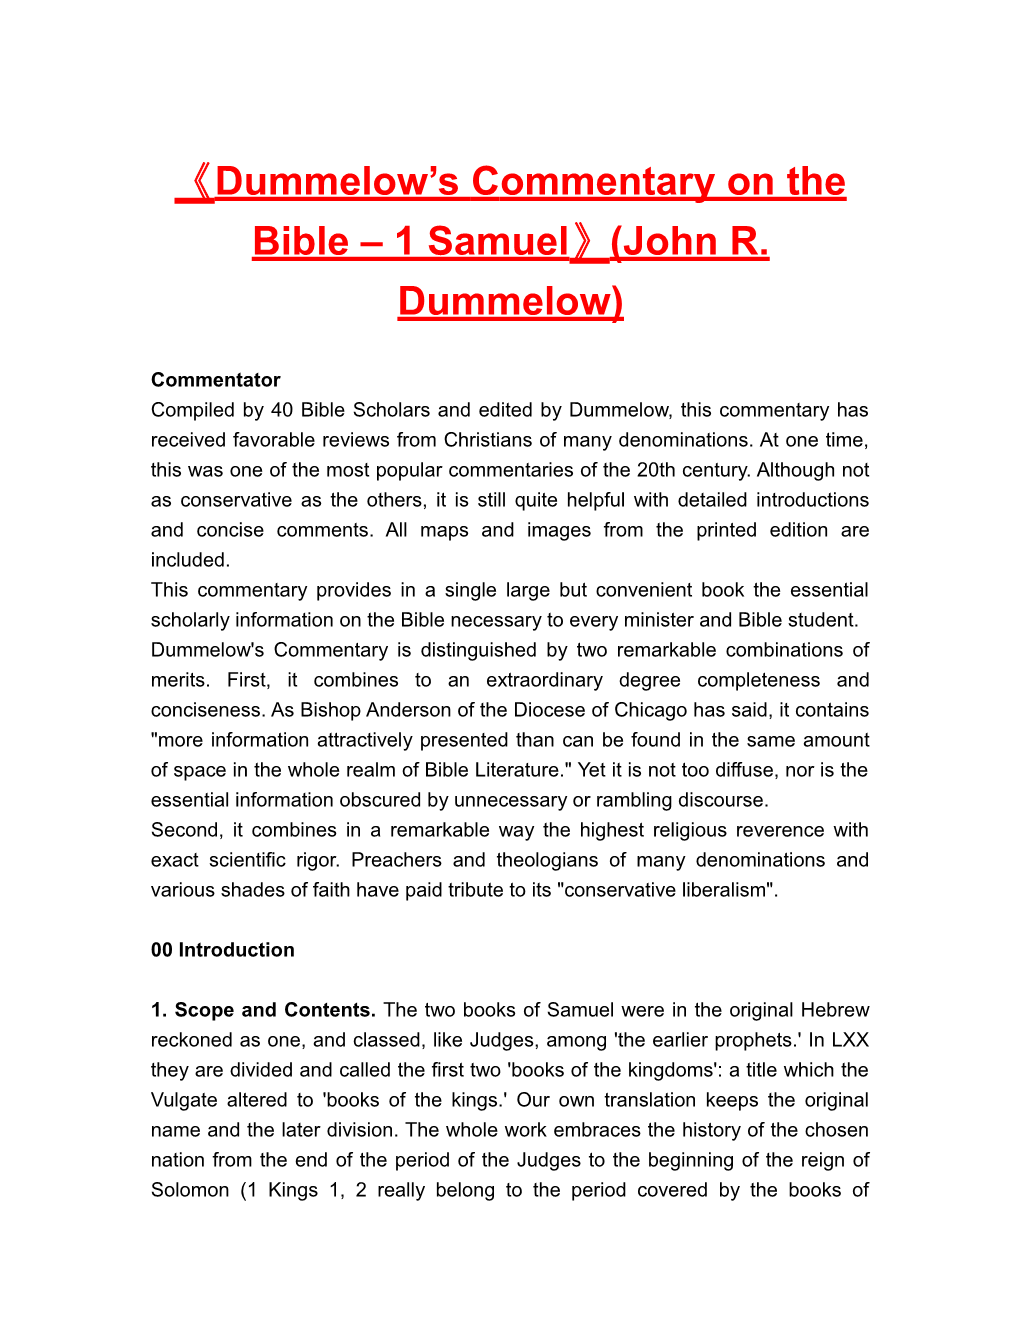 Dummelow S Commentary on the Bible 1 Samuel (John R. Dummelow)